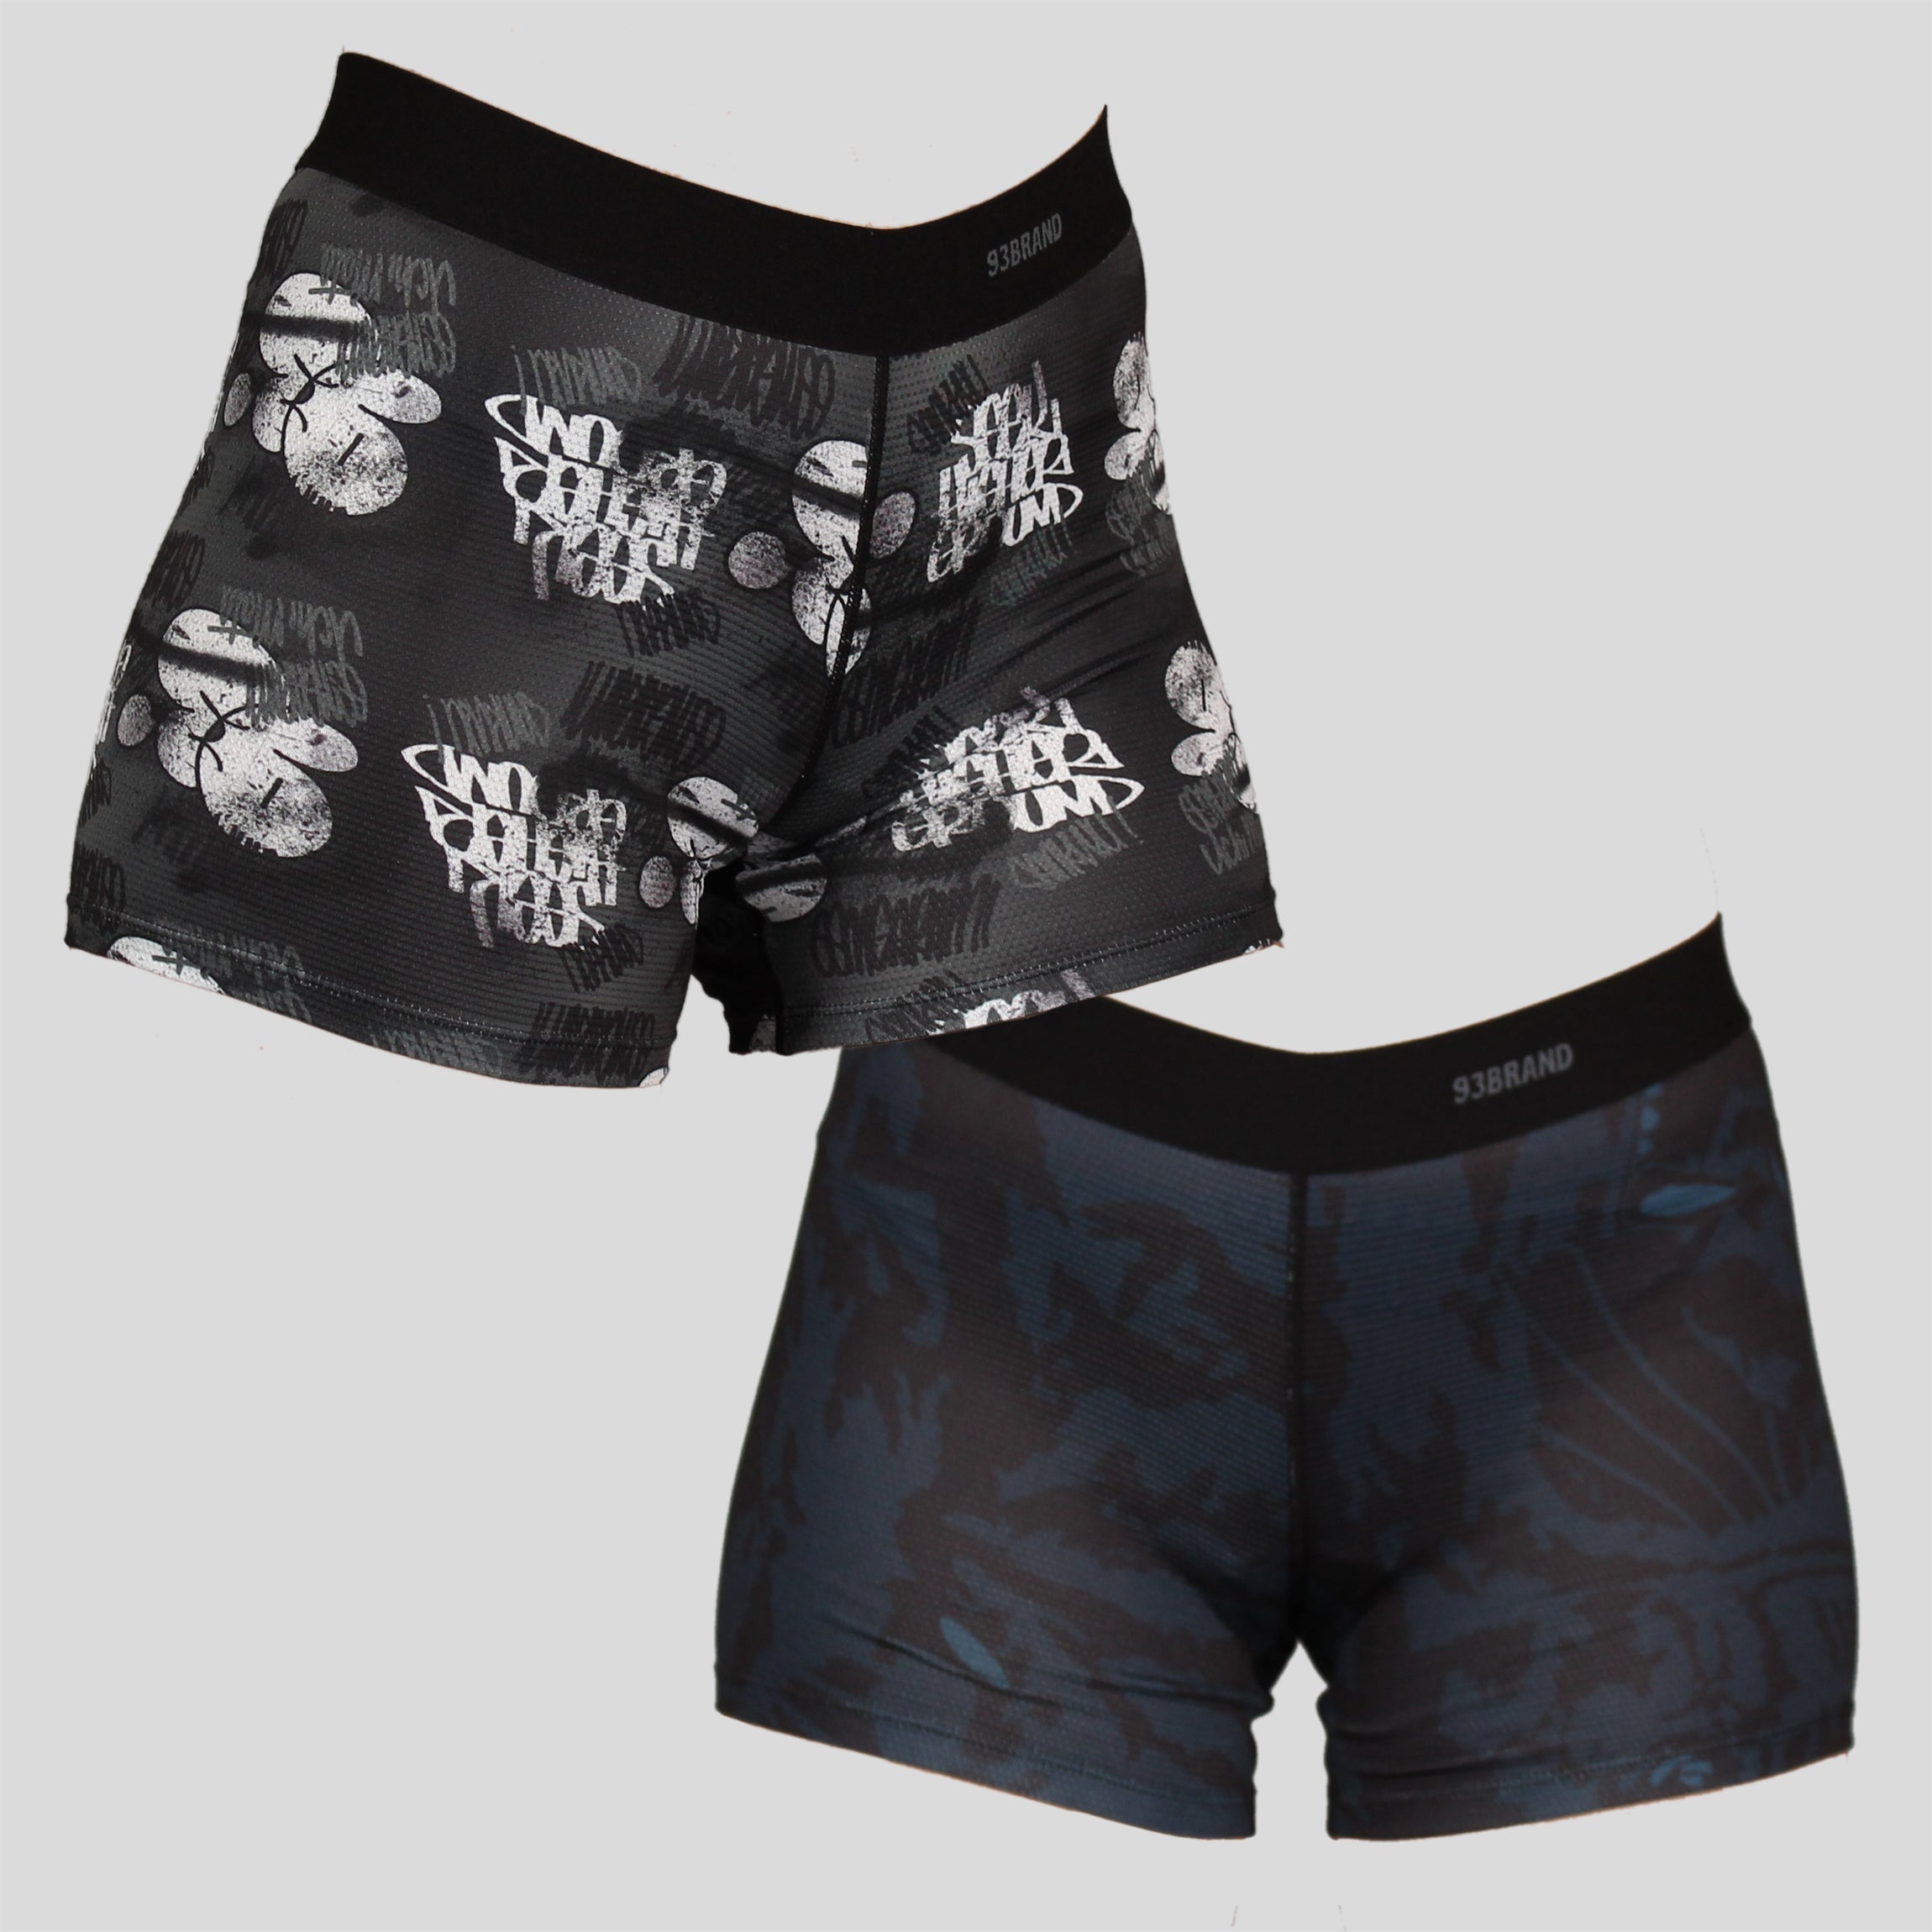 North South Jiu-Jitsu Underwear - Grappling Compression Women's Athletic  Underwear/Shorts for BJJ